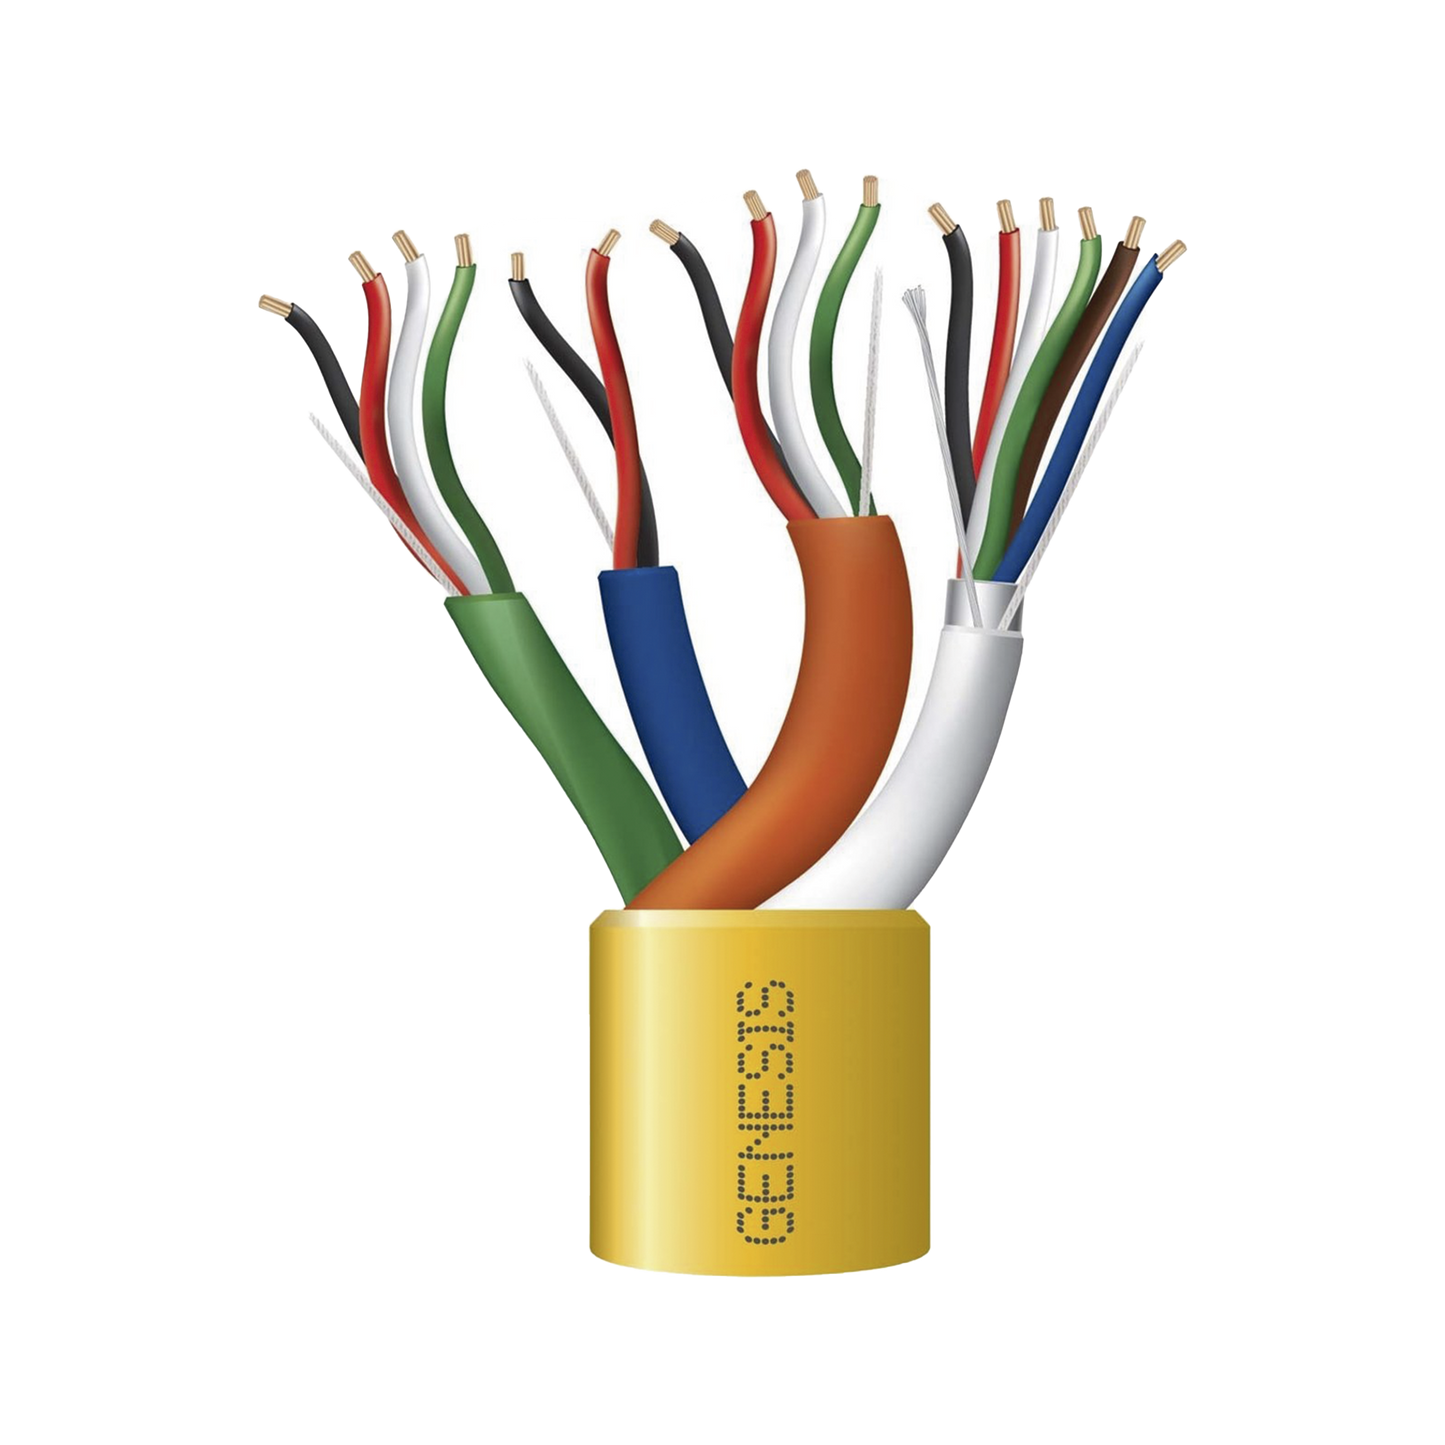 Bobina de Cable de 305 Metros / Color Amarillo / Compuesto por:  6x22 AWG blindado, 4x18 AWG, 4x22 AWG, y 2x22 AWG / Para Aplicaciones en Control de Acceso